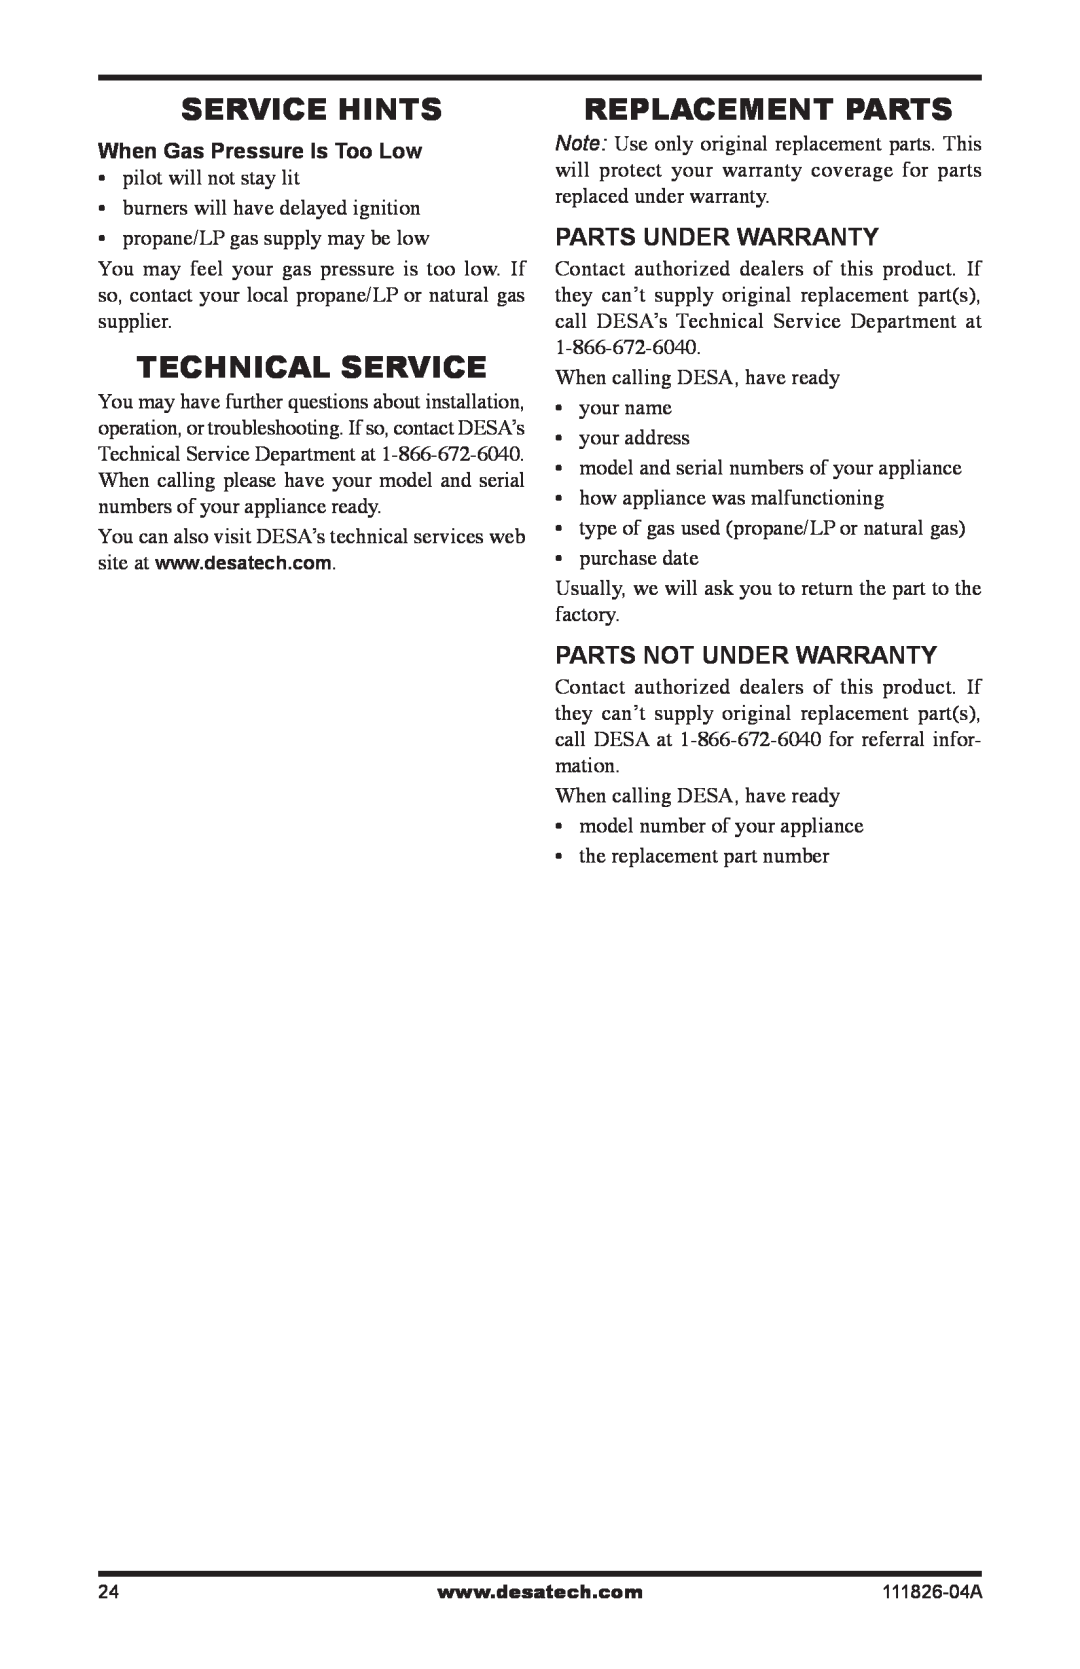 Desa VF-24N-PJD Service Hints, Technical Service, Replacement Parts, Parts Under Warranty, Parts Not Under Warranty 